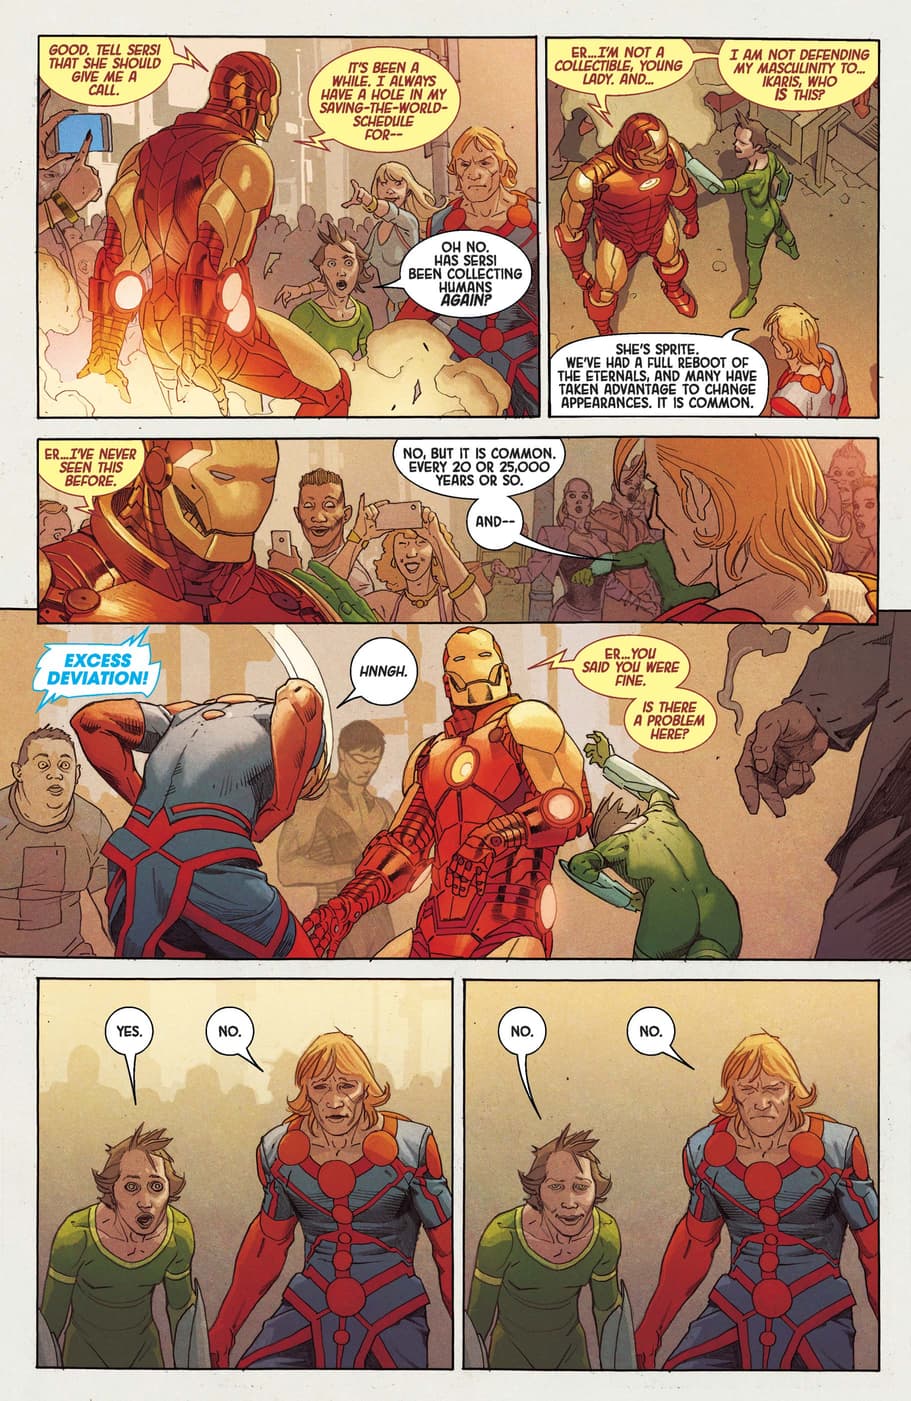 Tony Stark questions the Eternals.